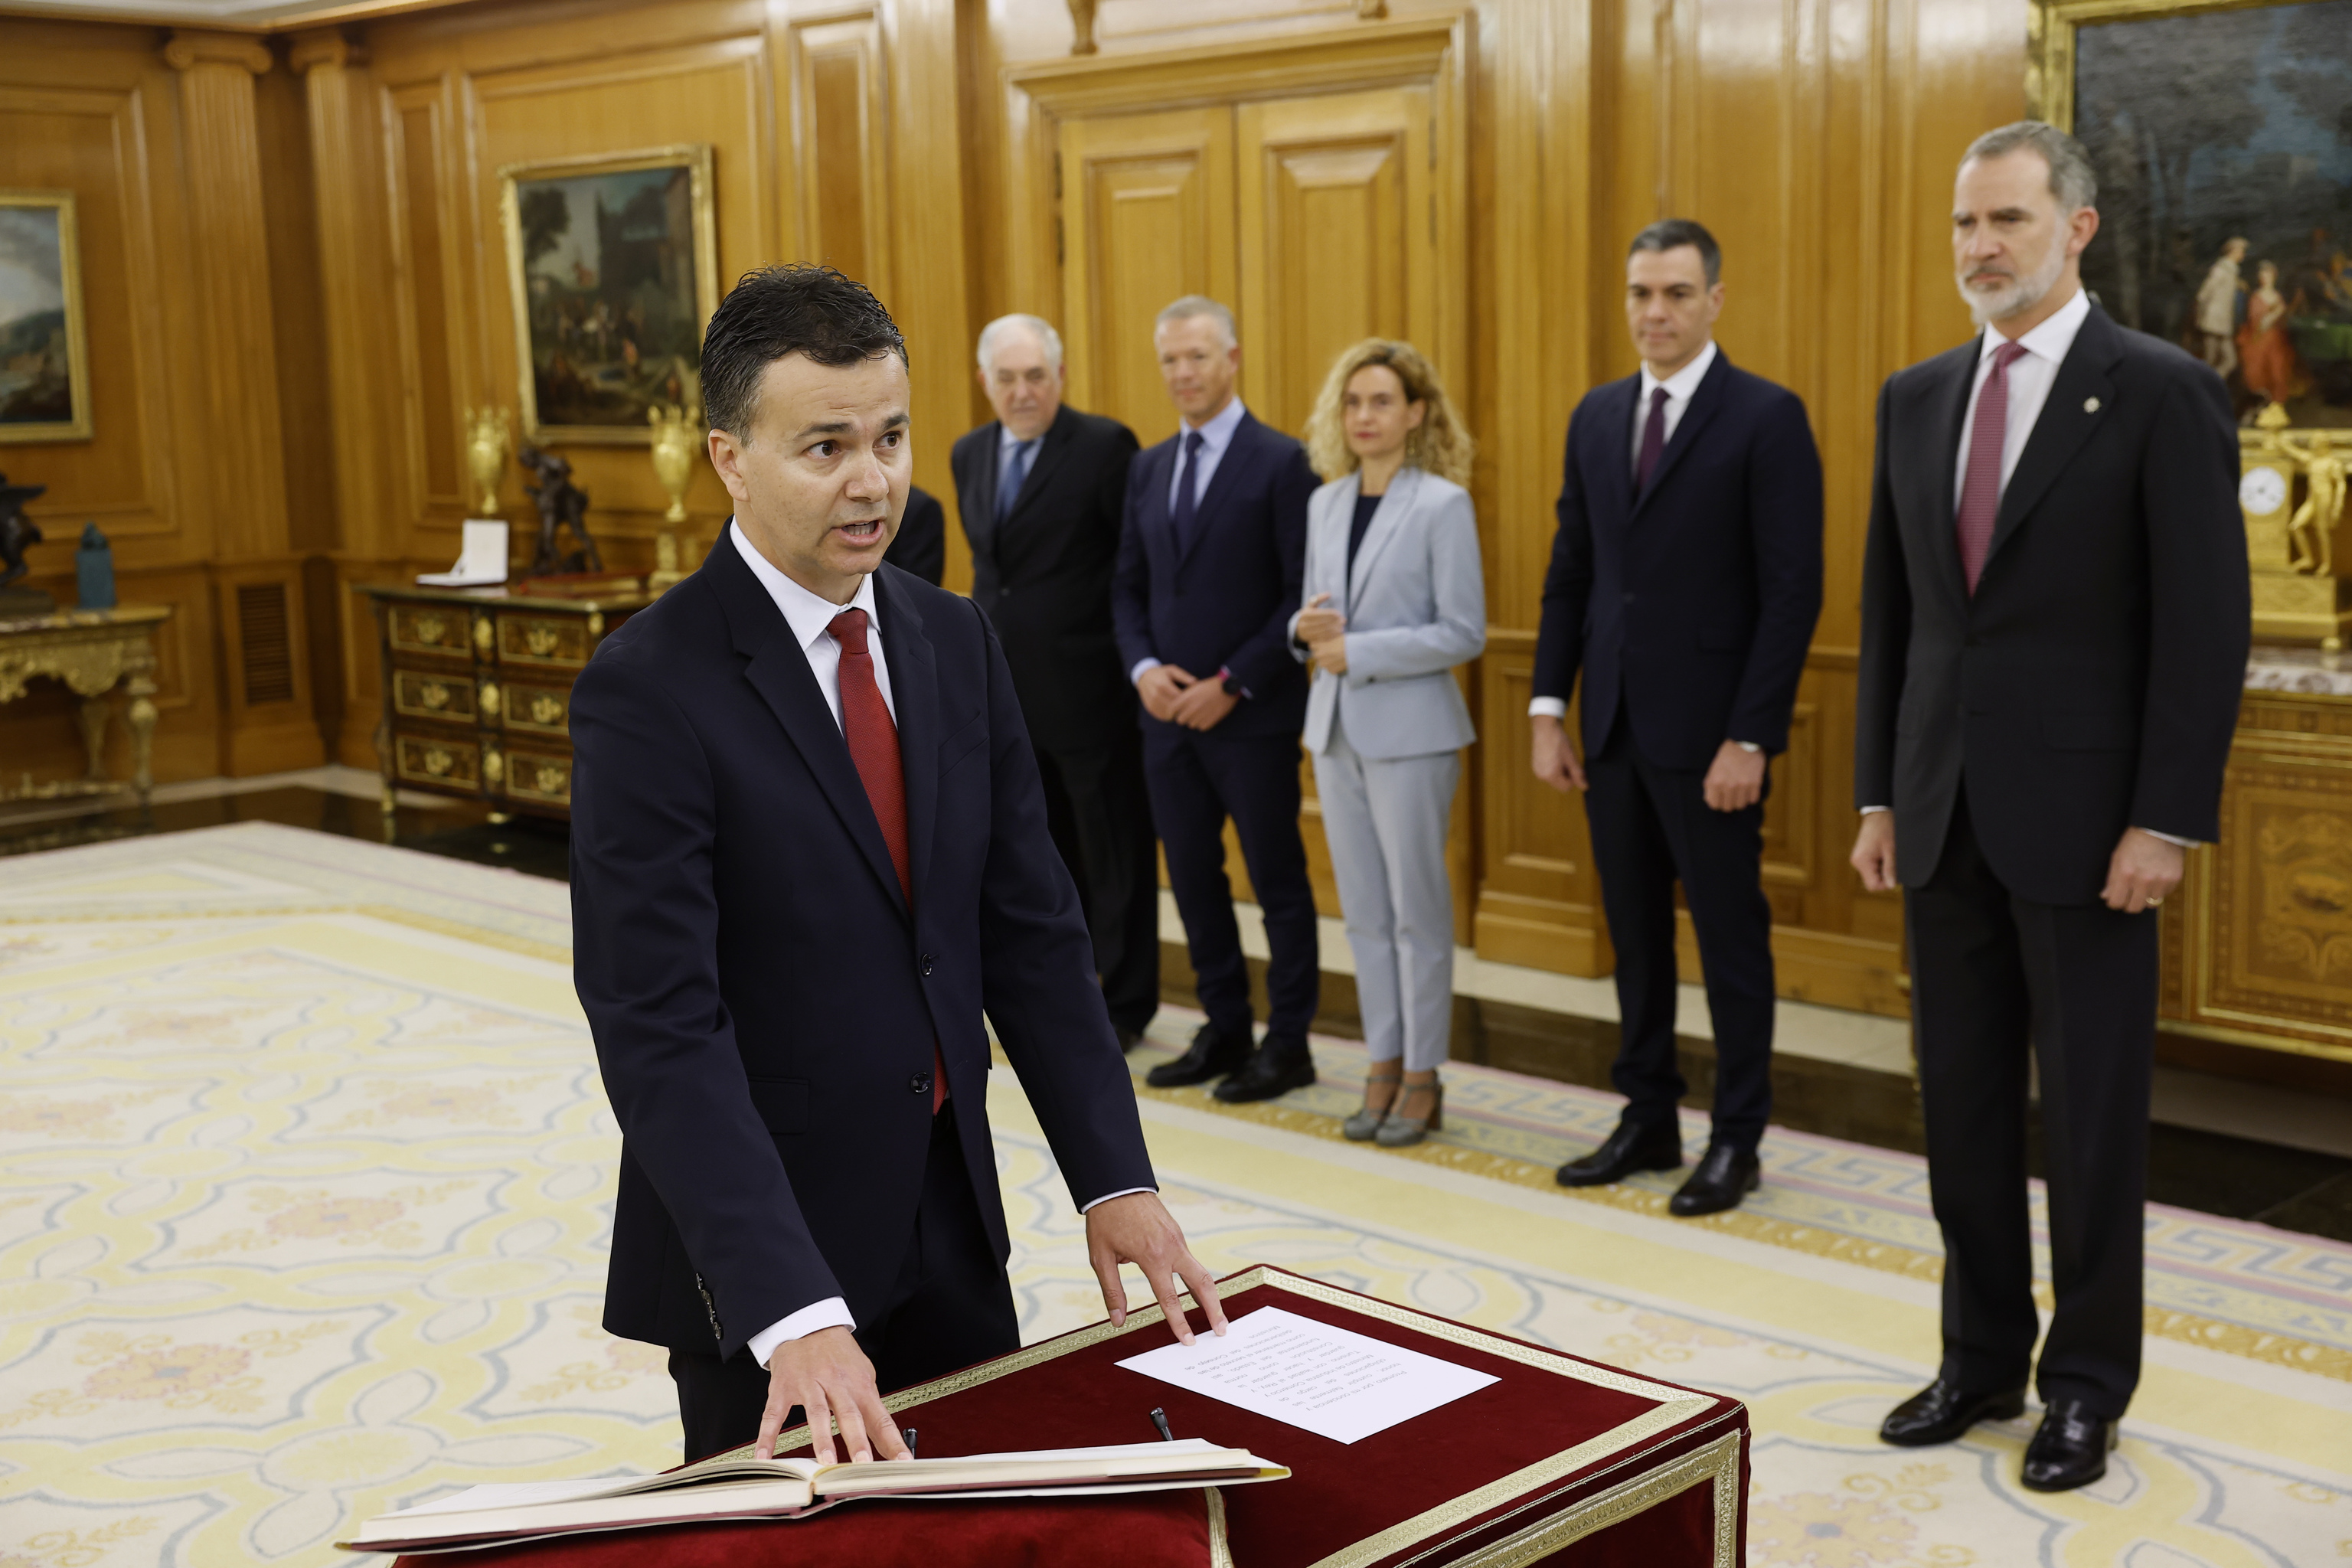 Hctor Gmez promete su cargo como ministro de Industria ante Felipe VI.